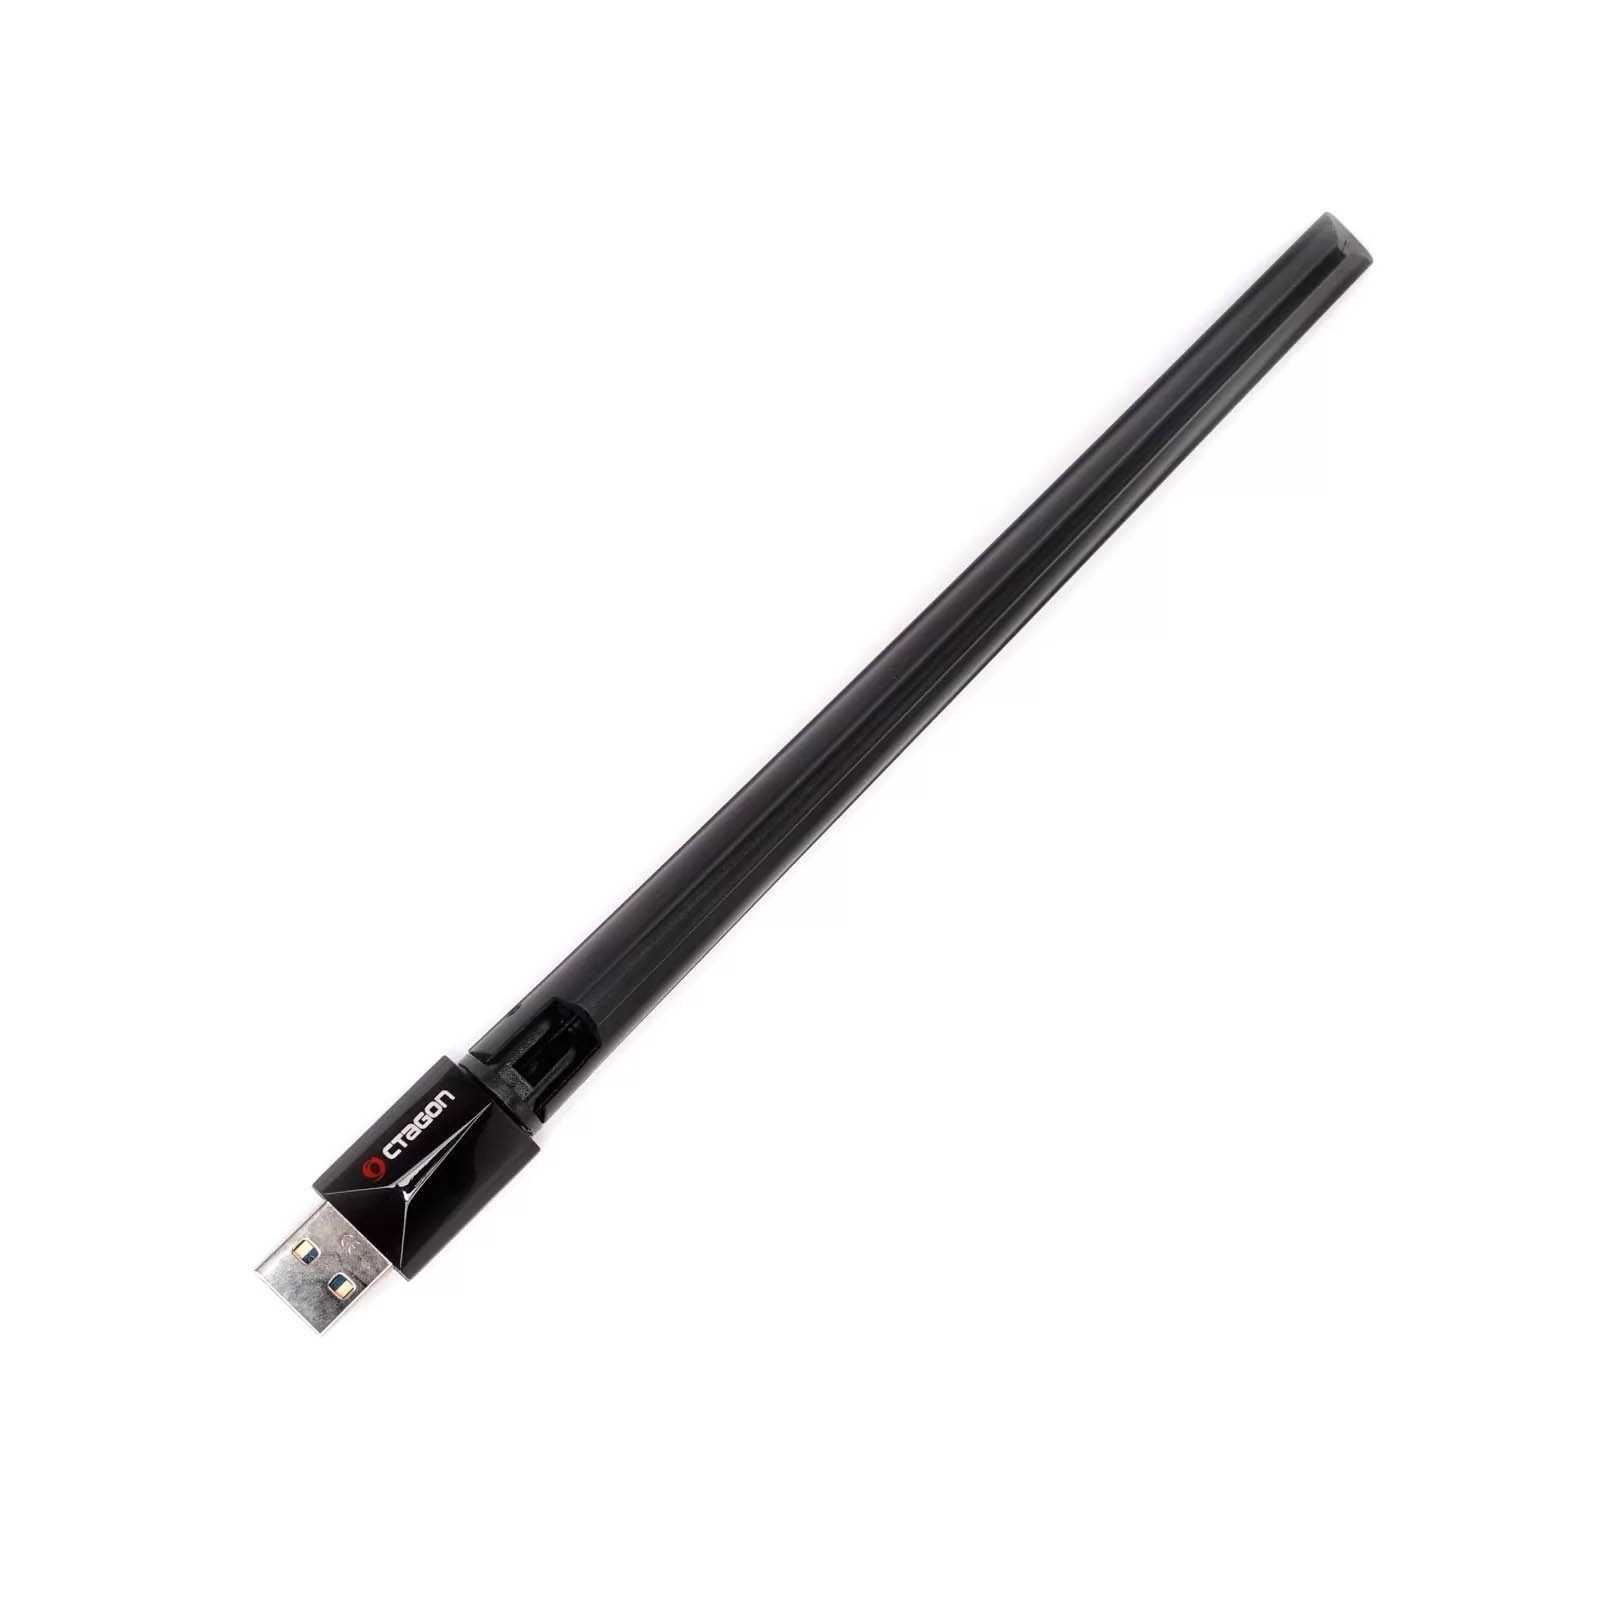 OCTAGON 2.0 WL058 USB Stick Wlan WLAN Adapter 150Mbit/s Antenne +5dB